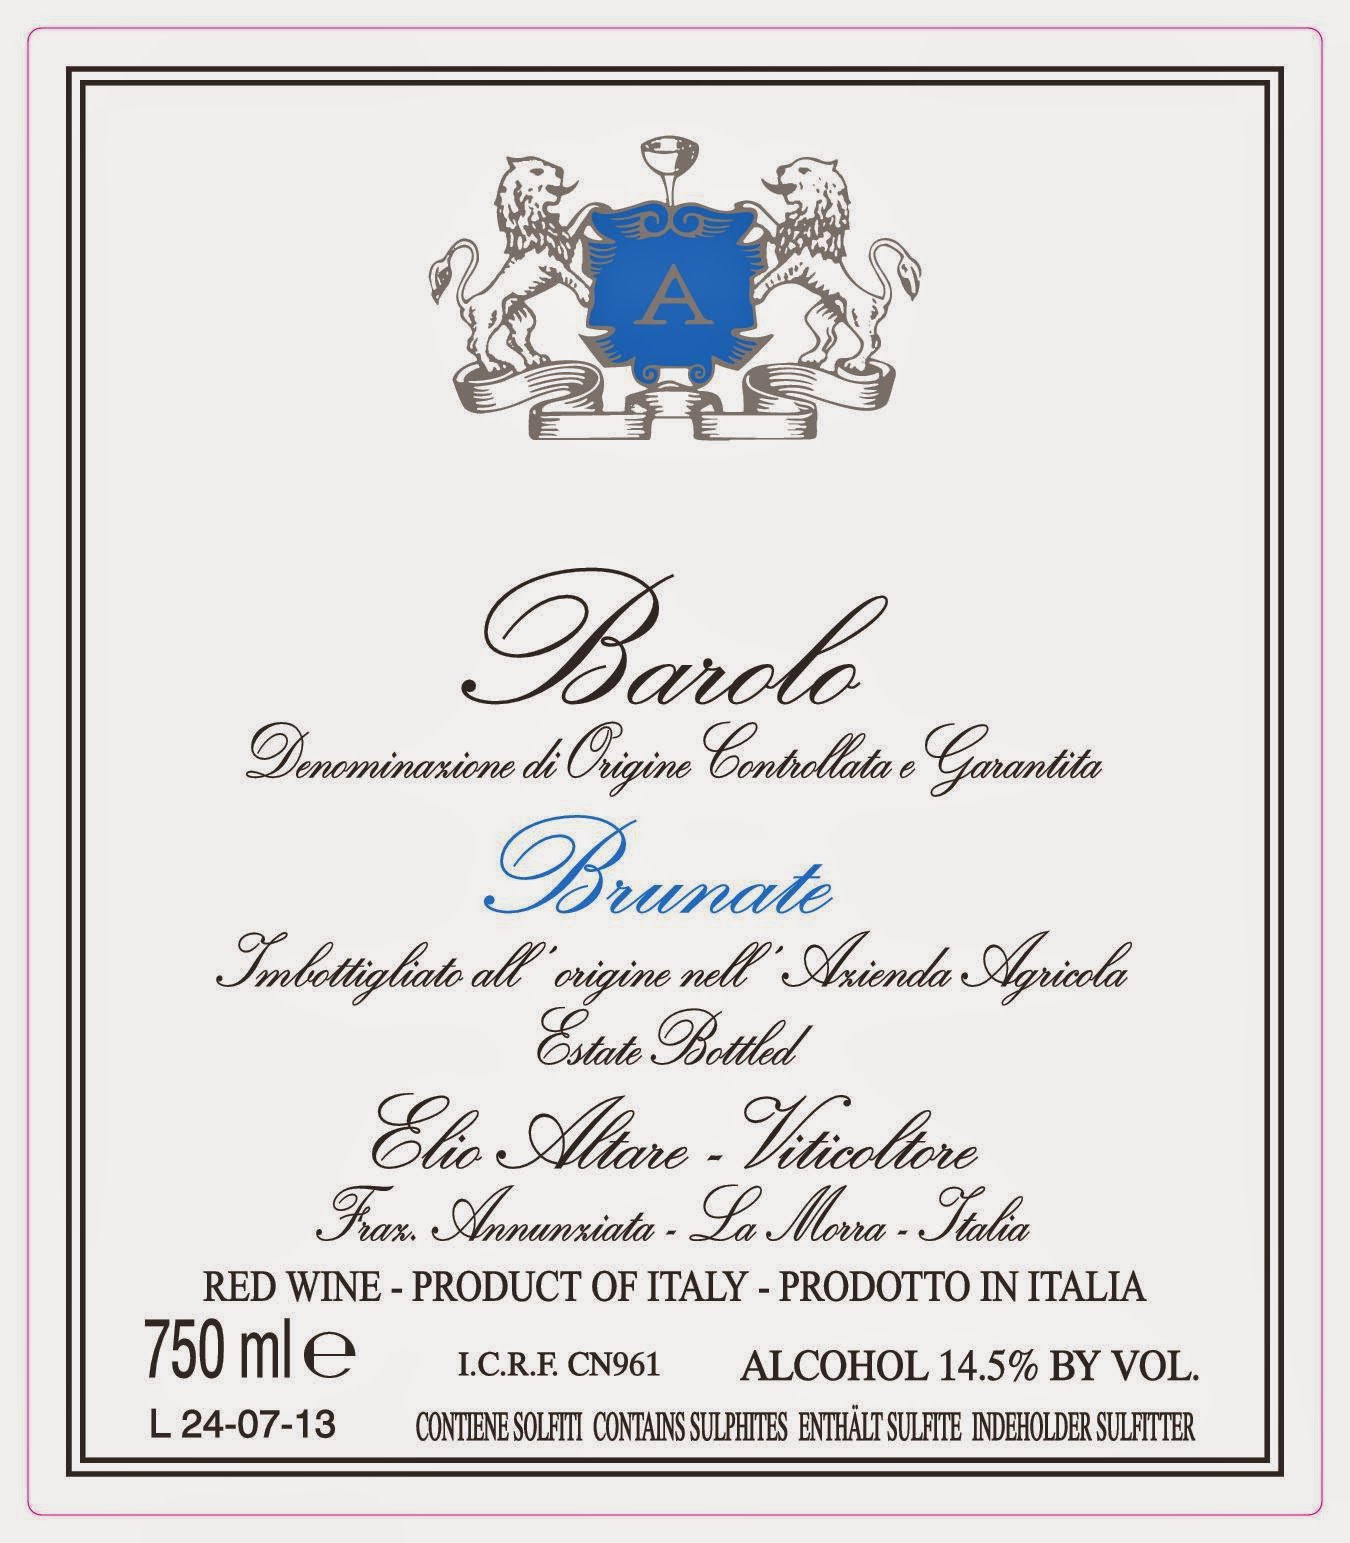 etichette branding barolo labels